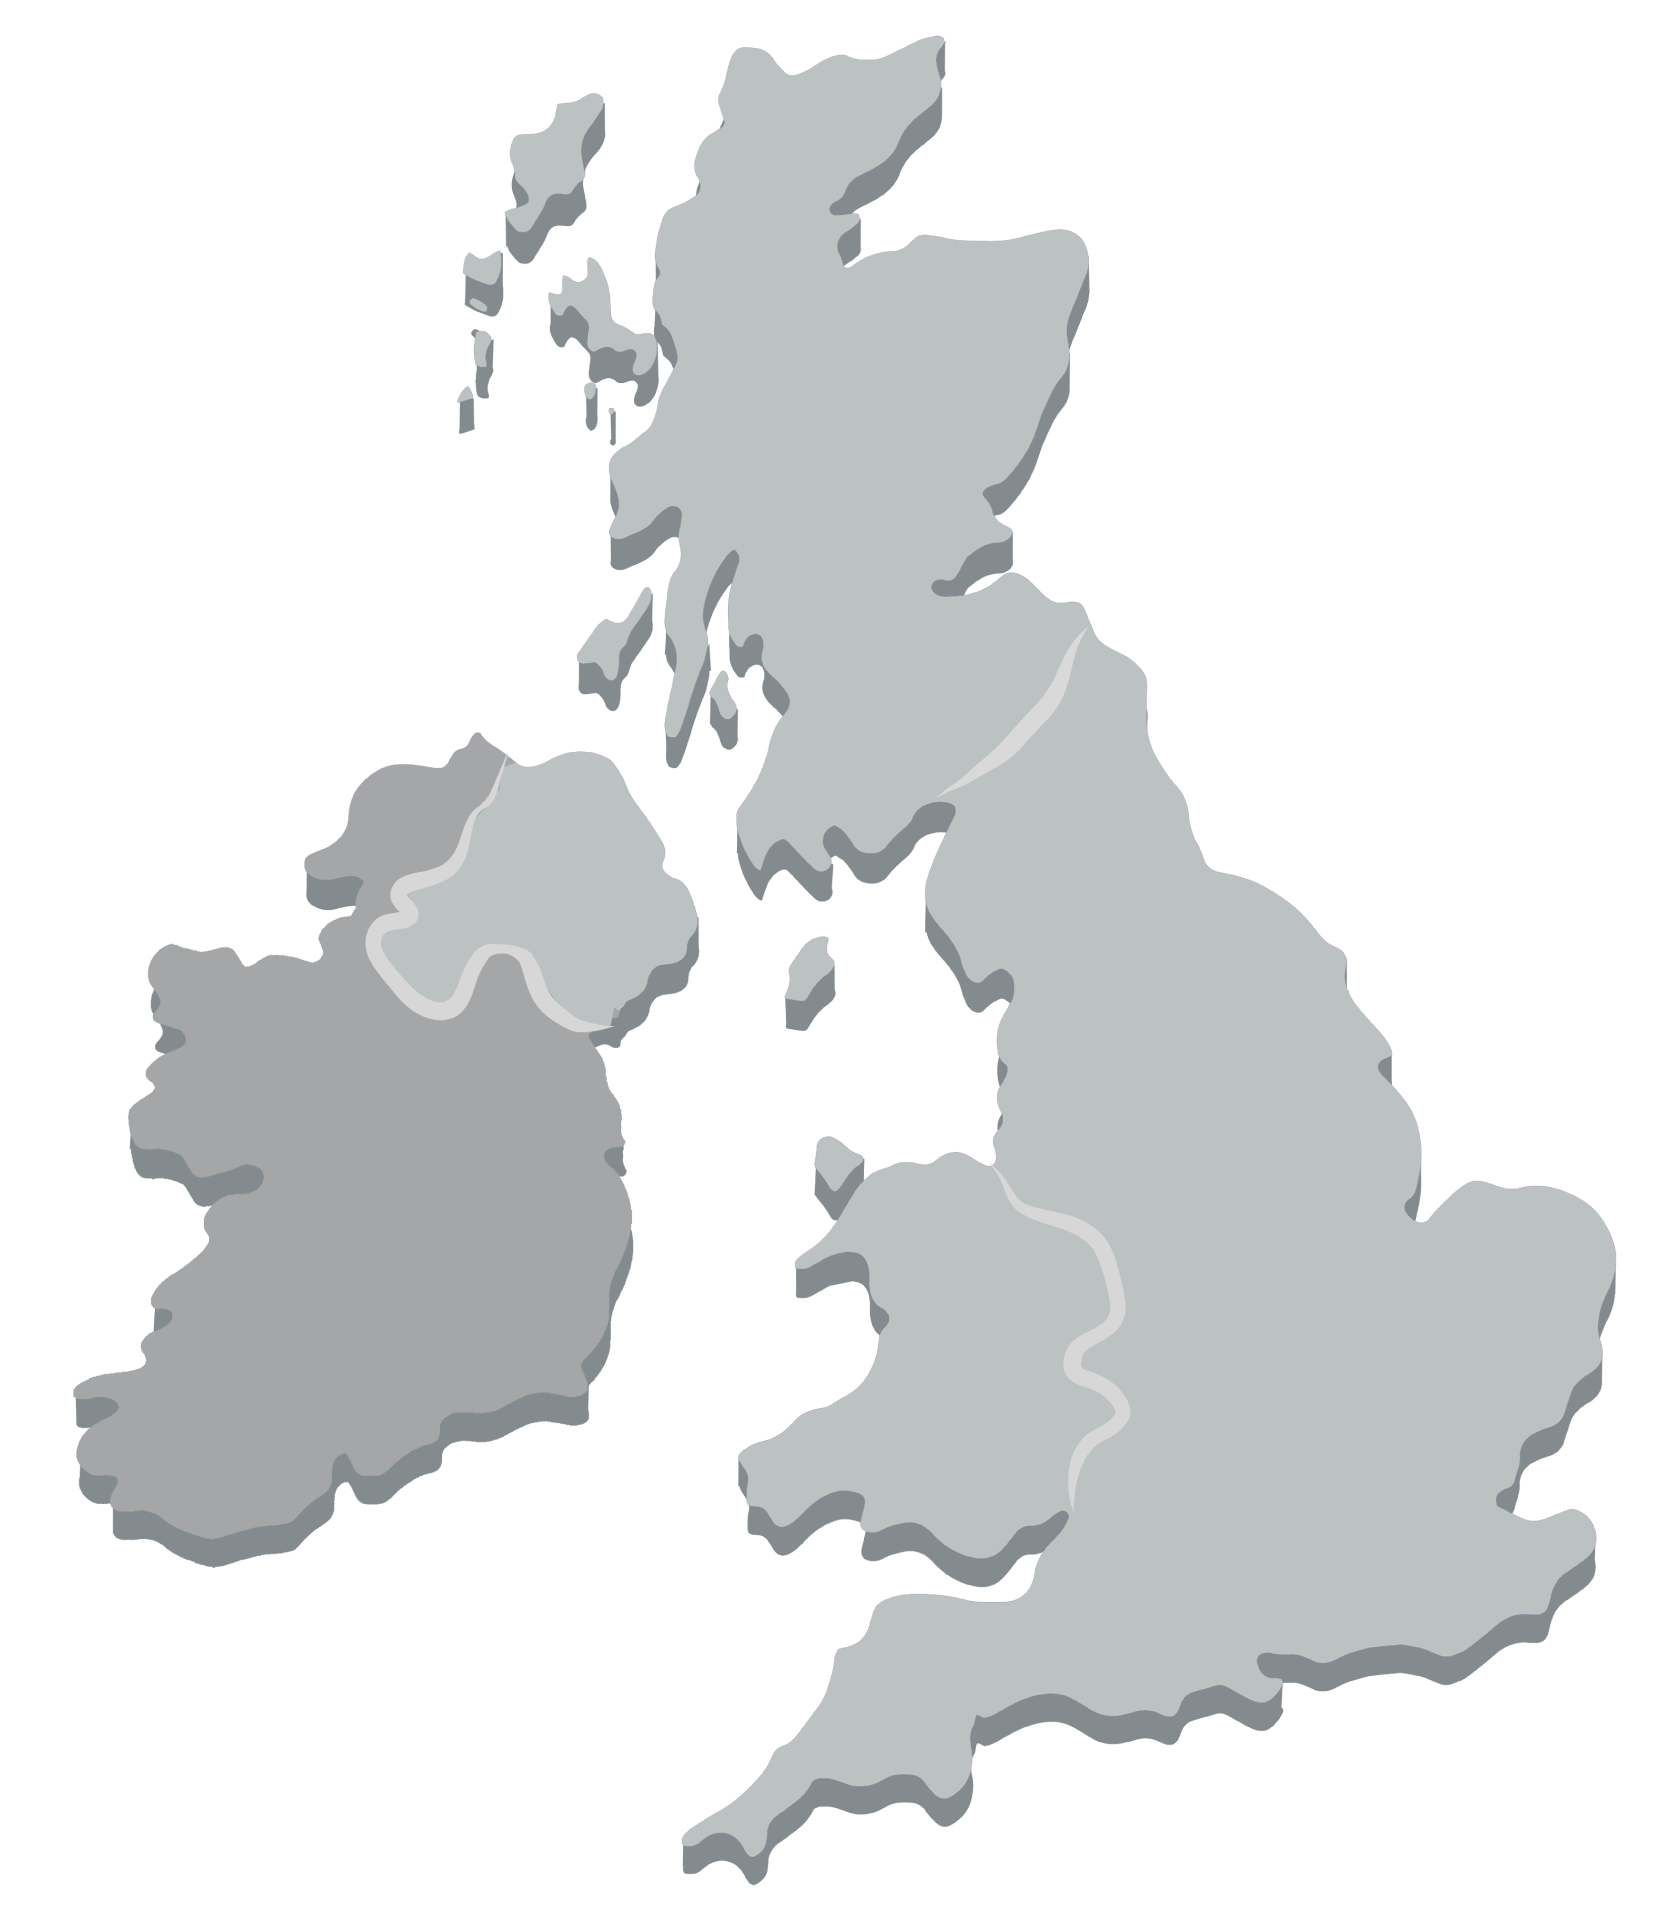 Make it British map of the UK